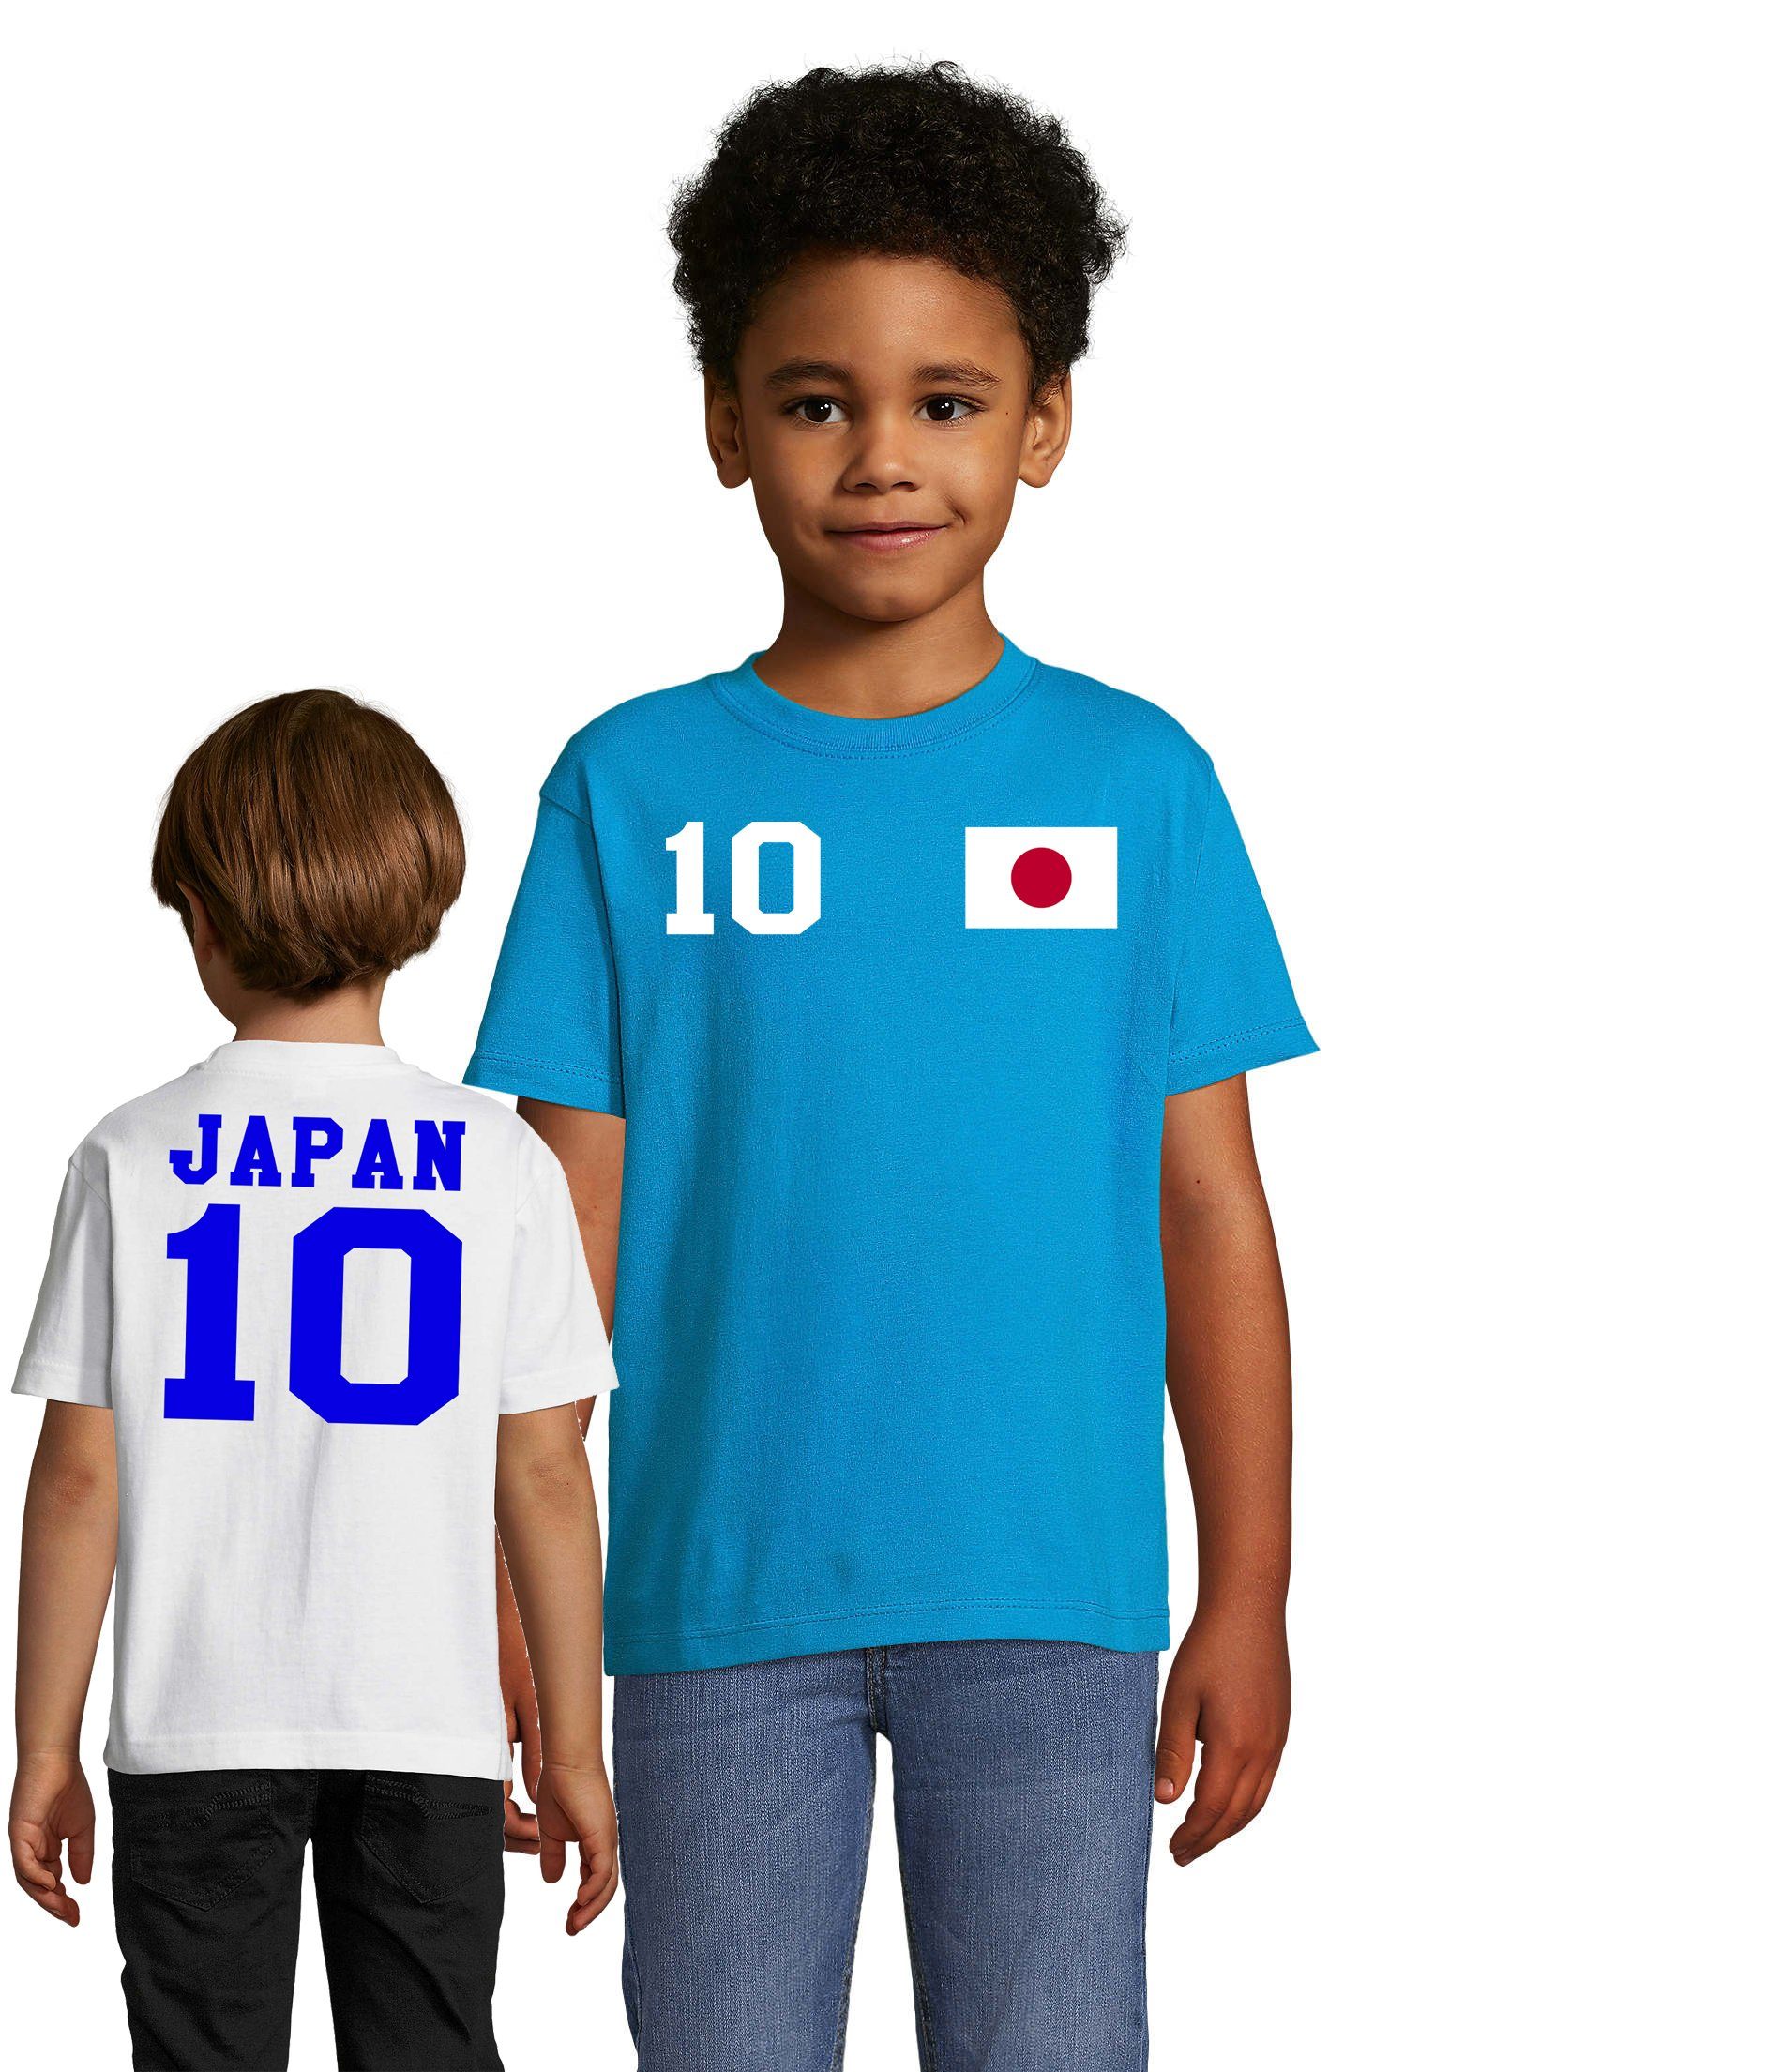 Blondie & Brownie T-Shirt Kinder Japan Asien Sport Trikot Fußball Handball Meister WM Weiss/Blau